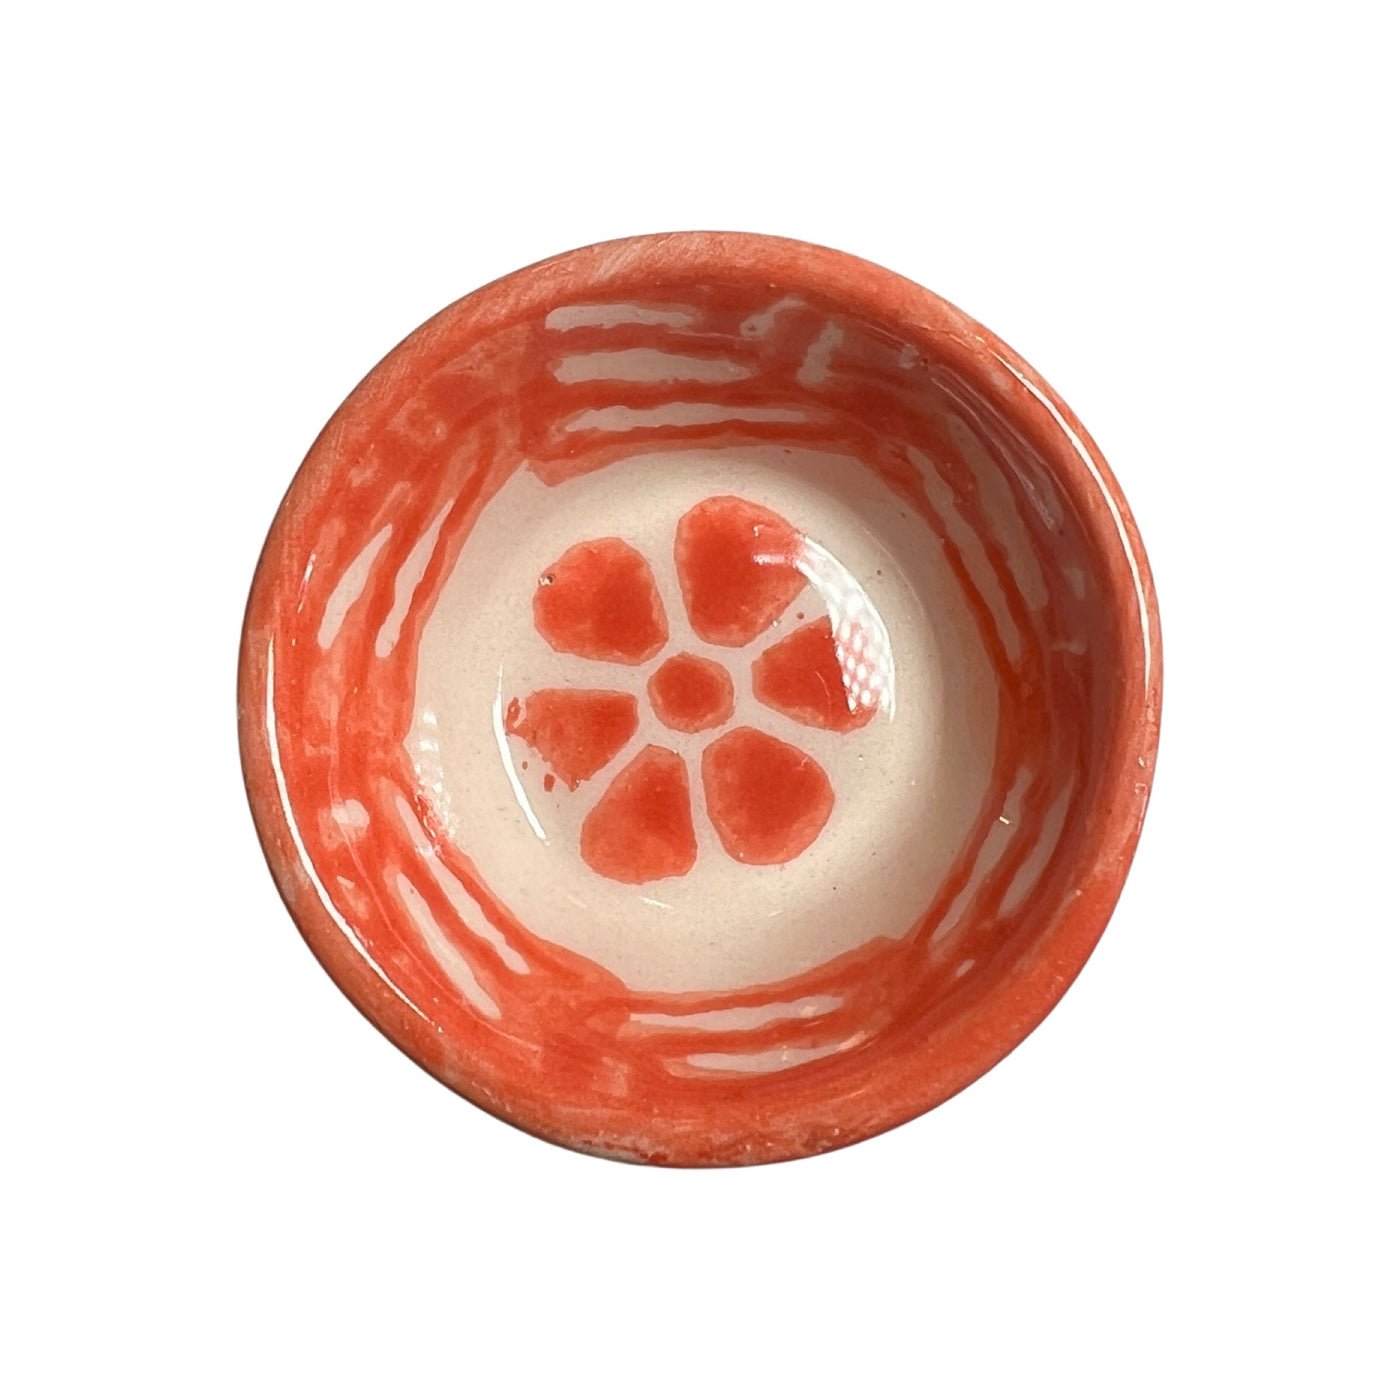 orange ceramic bowl with a flower design